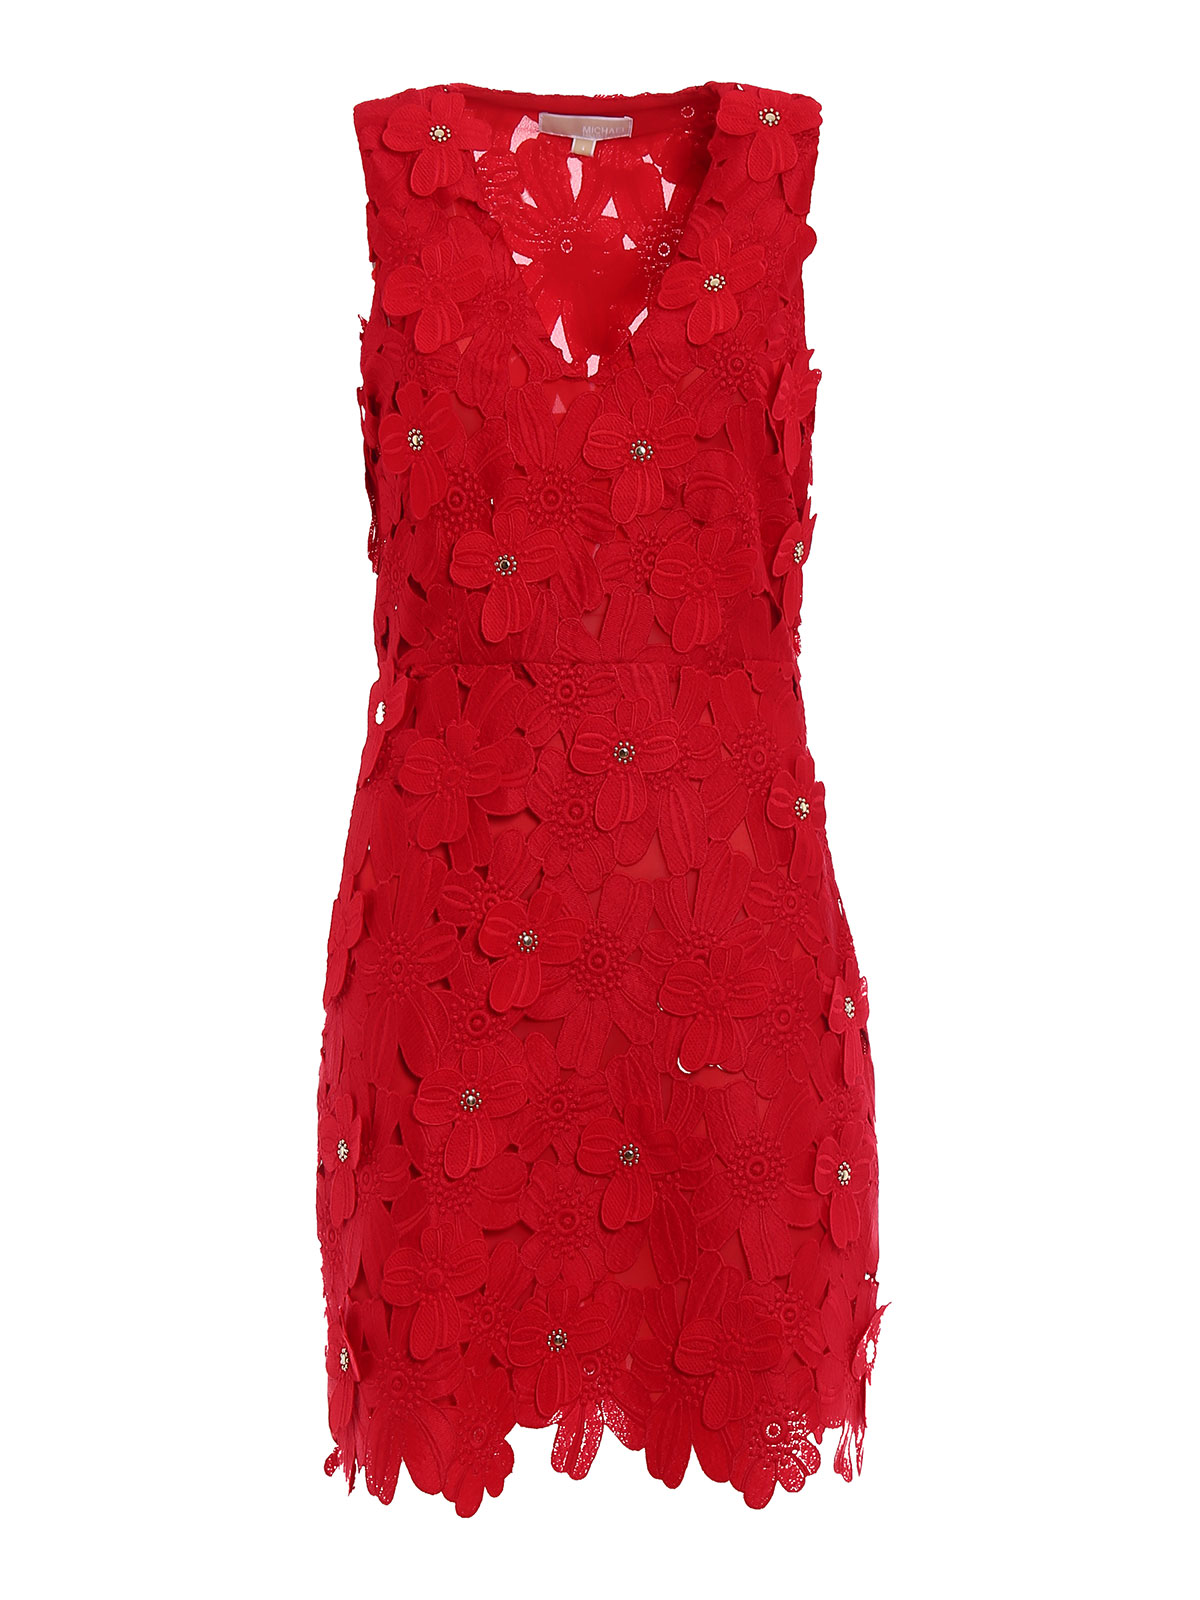 michael kors red lace dress